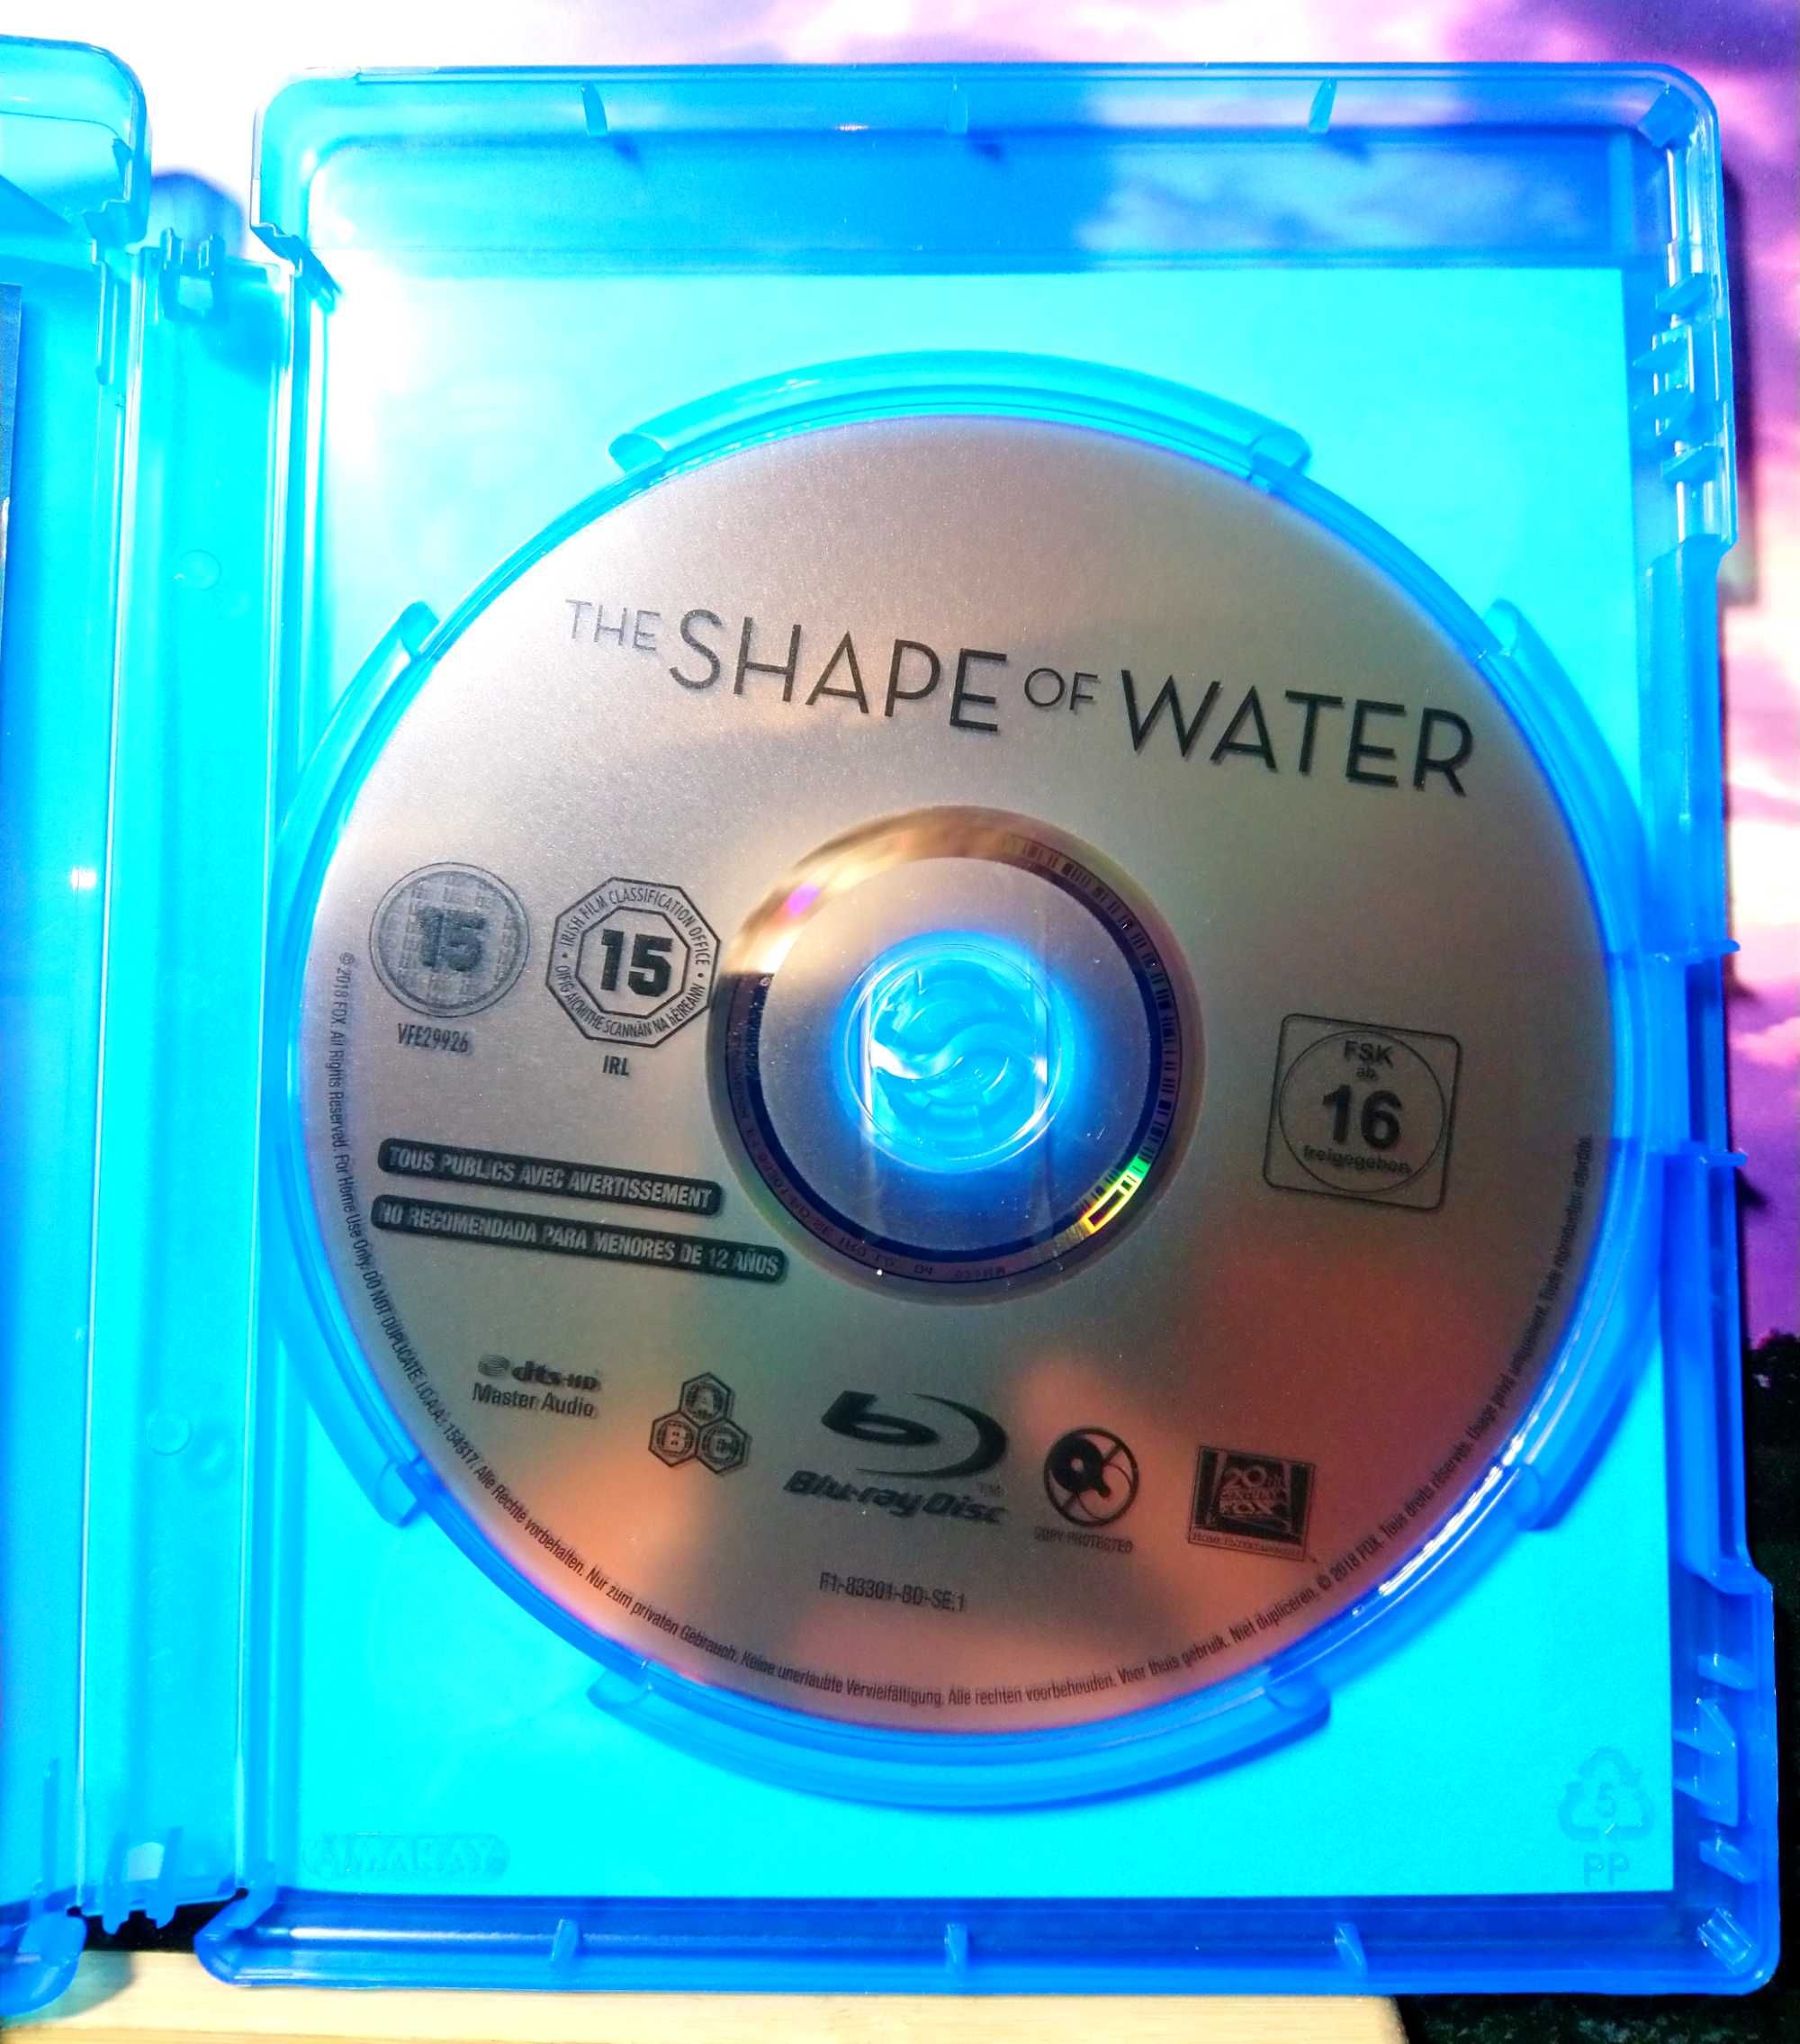 Blu-ray film: "Kształt Wody" / "Shape of Water"